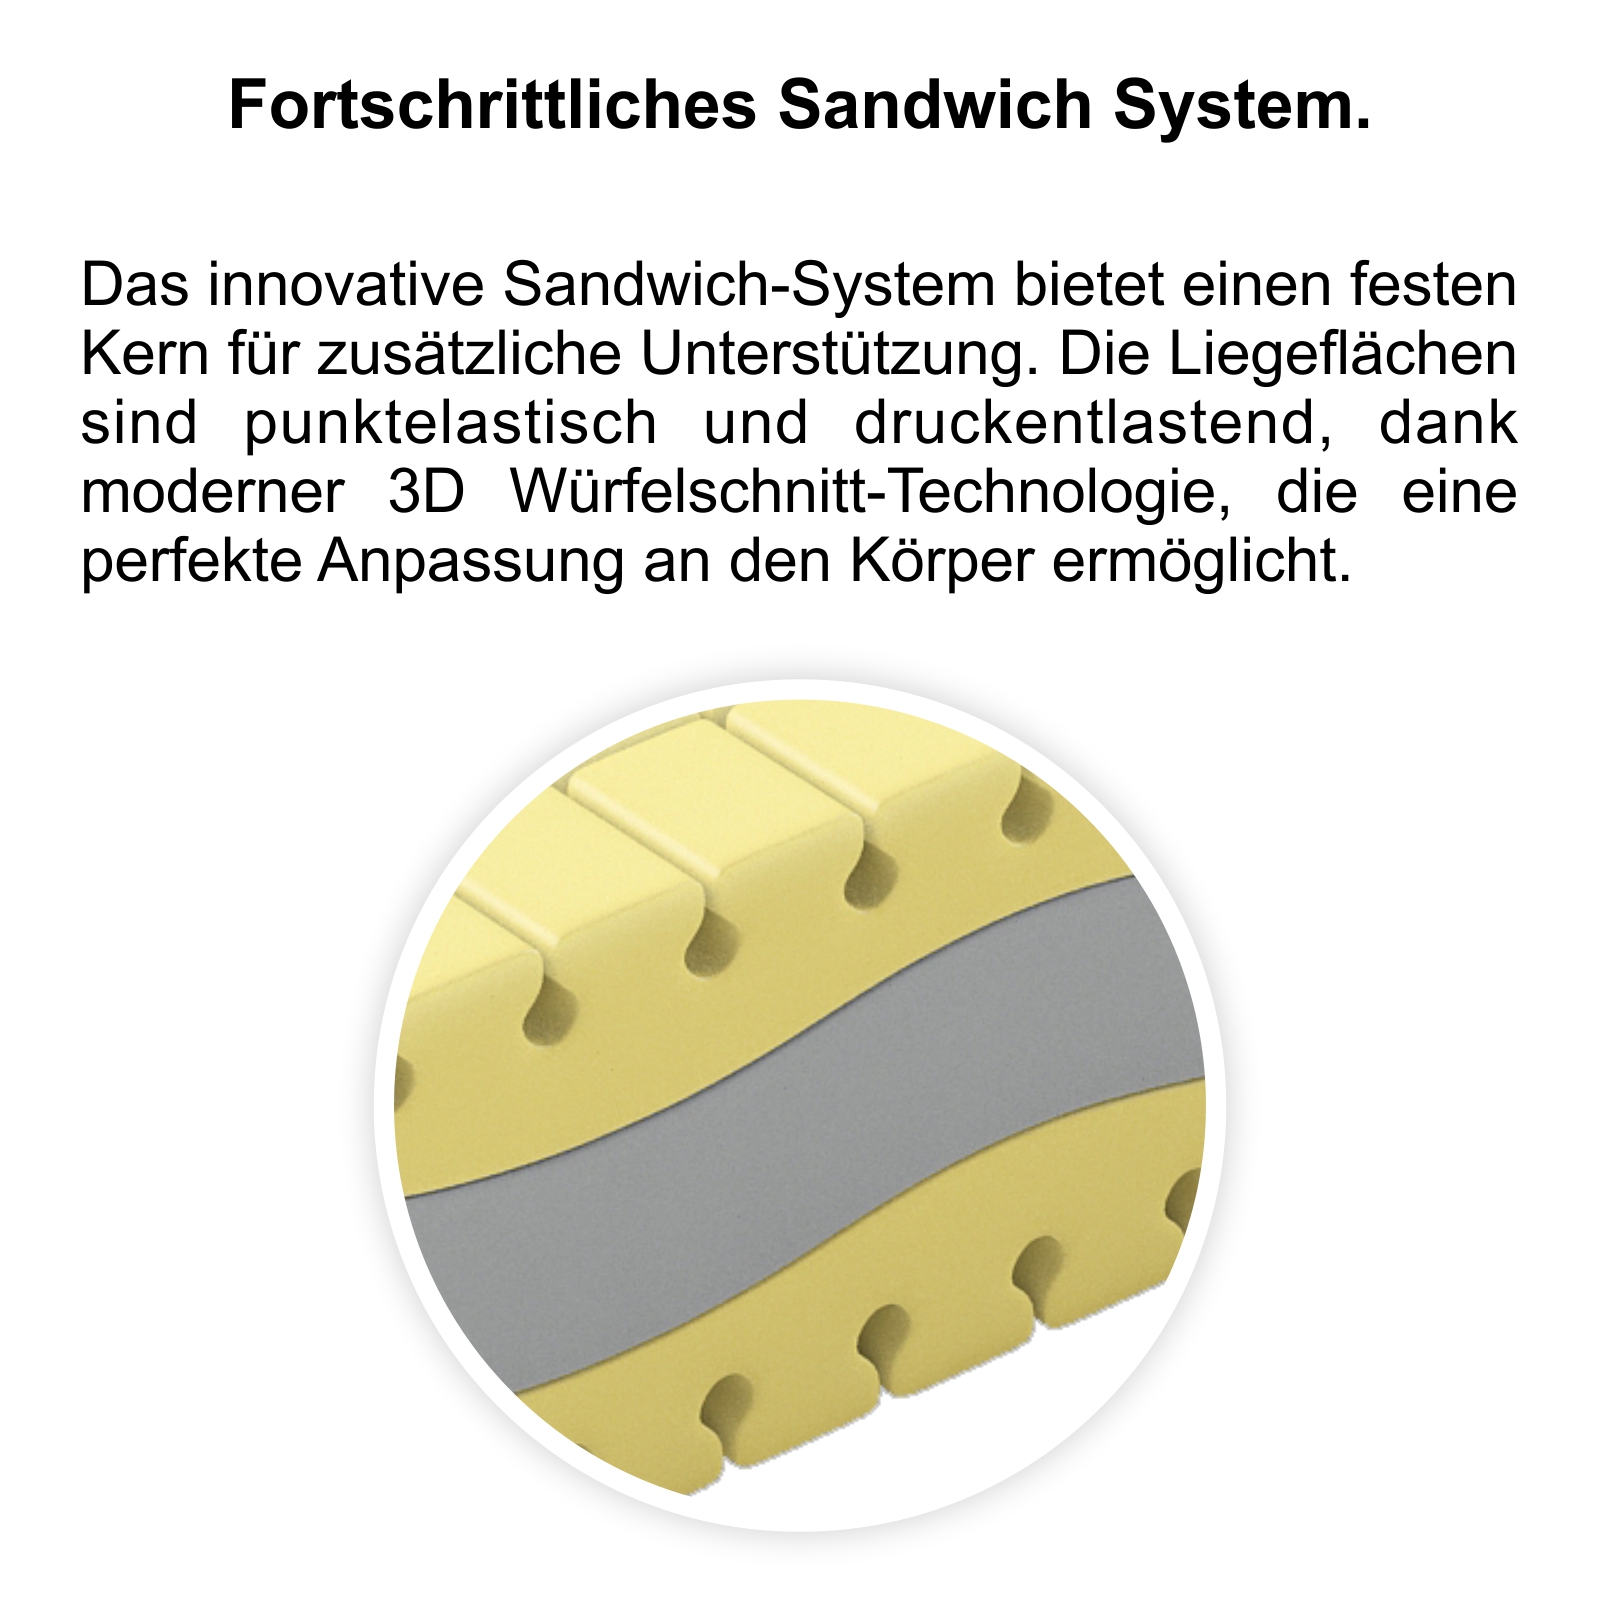 Kaltschaummatratze Medisan Premium, Fokus Sandwichaufbau des Kaltschaumkerns